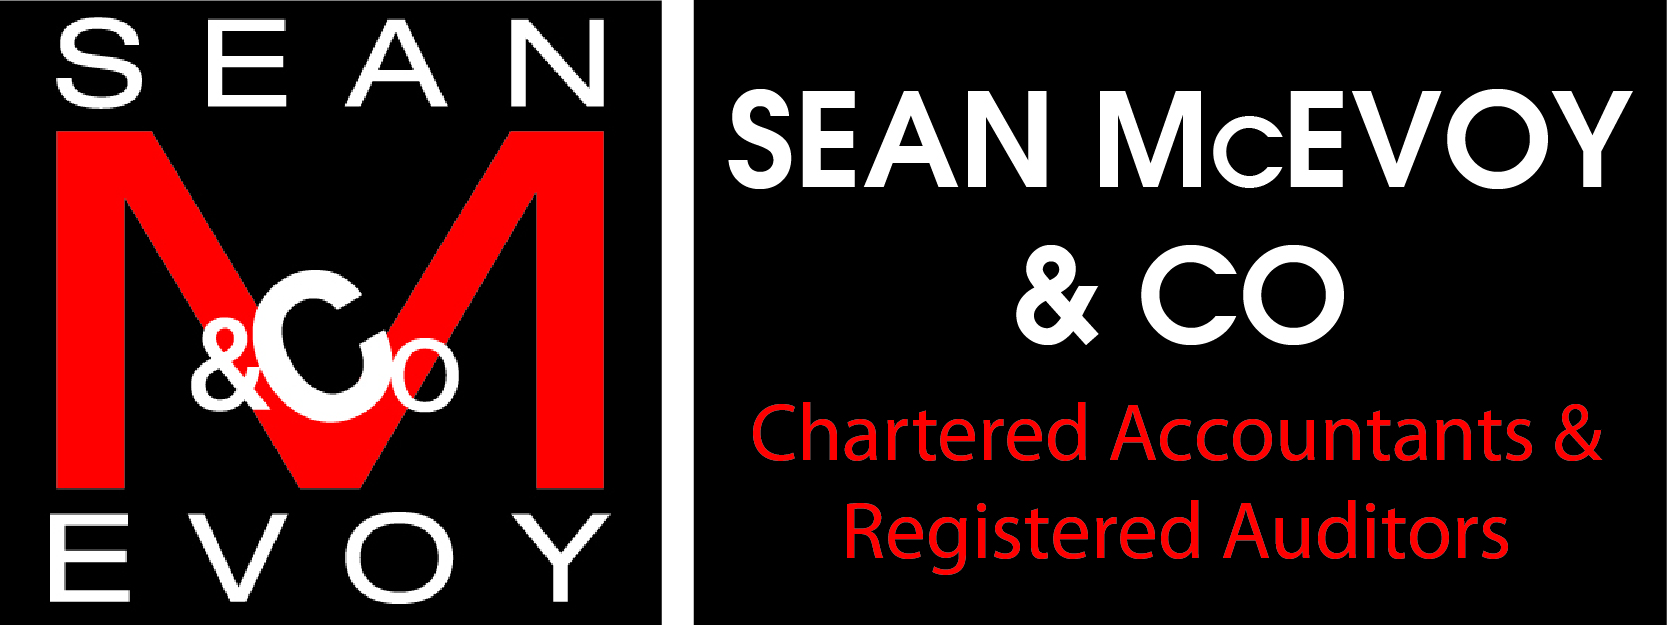 Sean McEvoy & Co Accountants